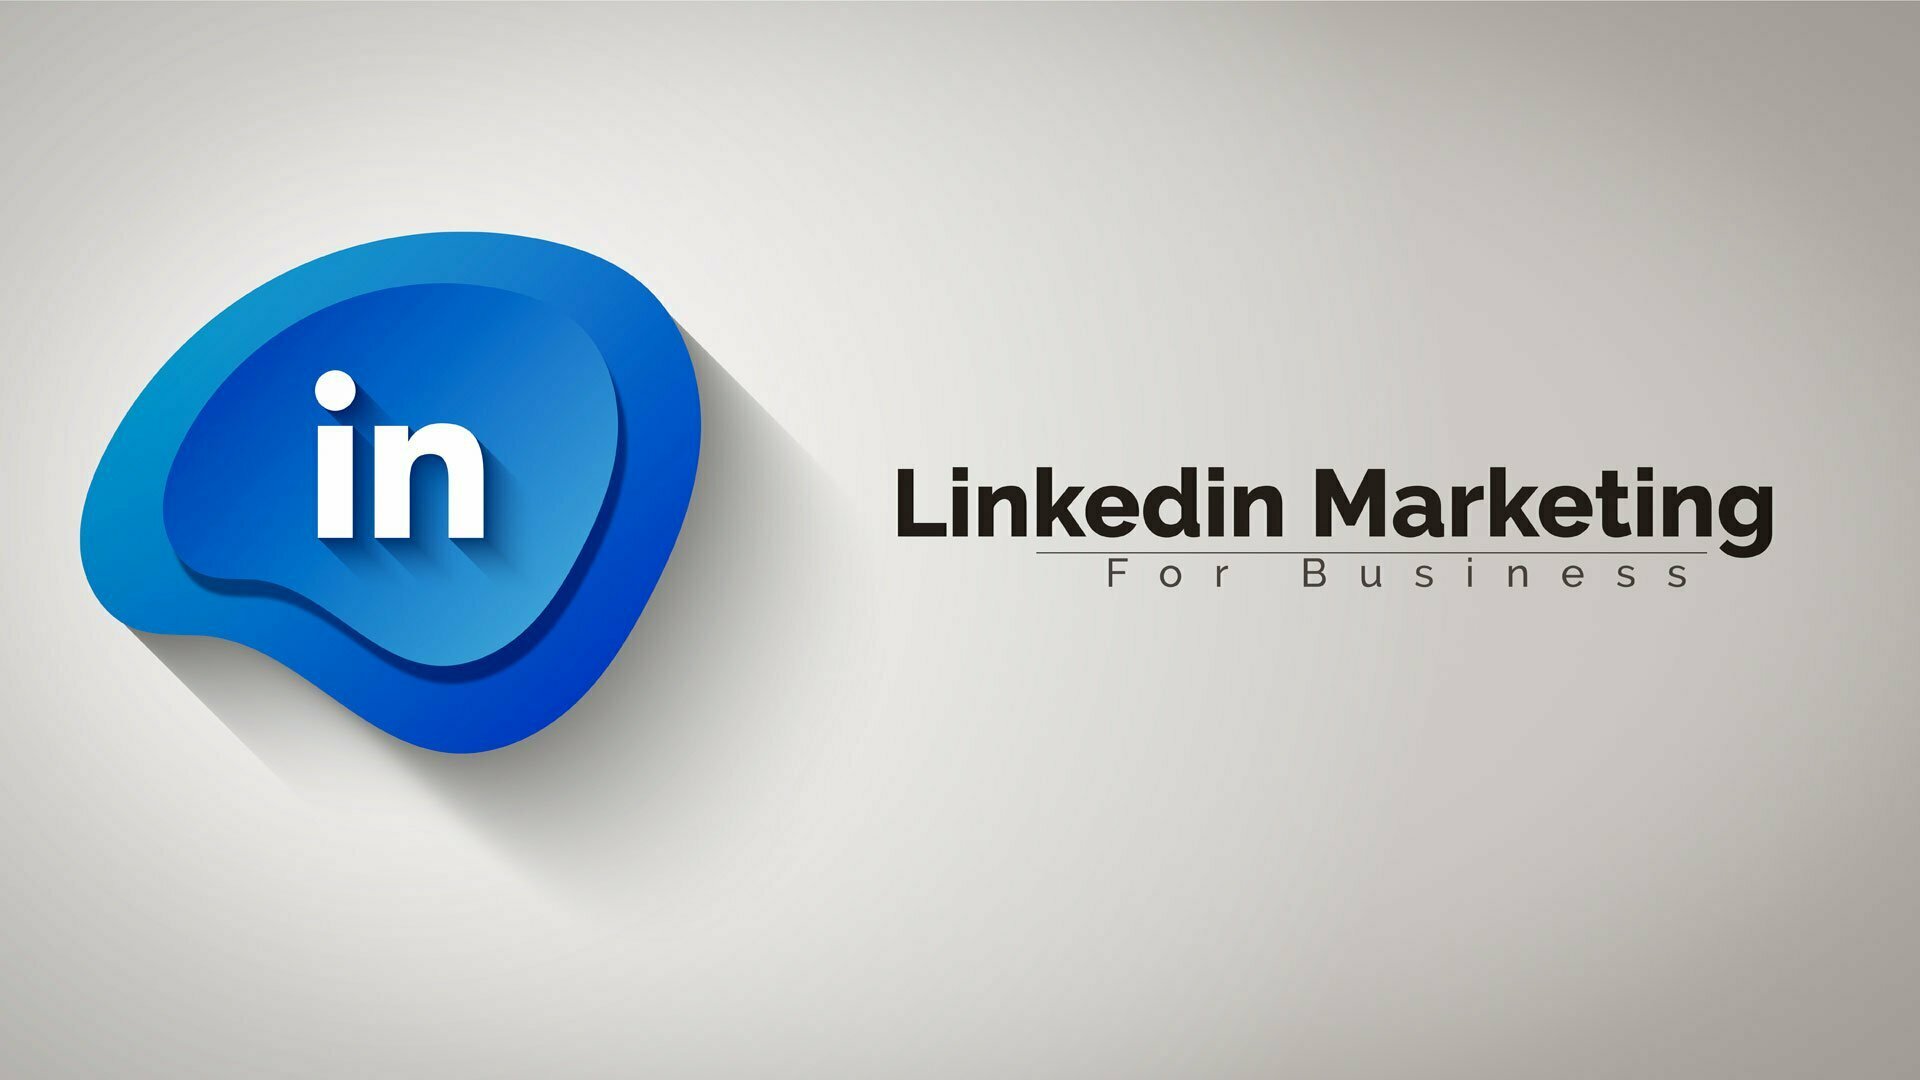 LinkedIn Marketing for business